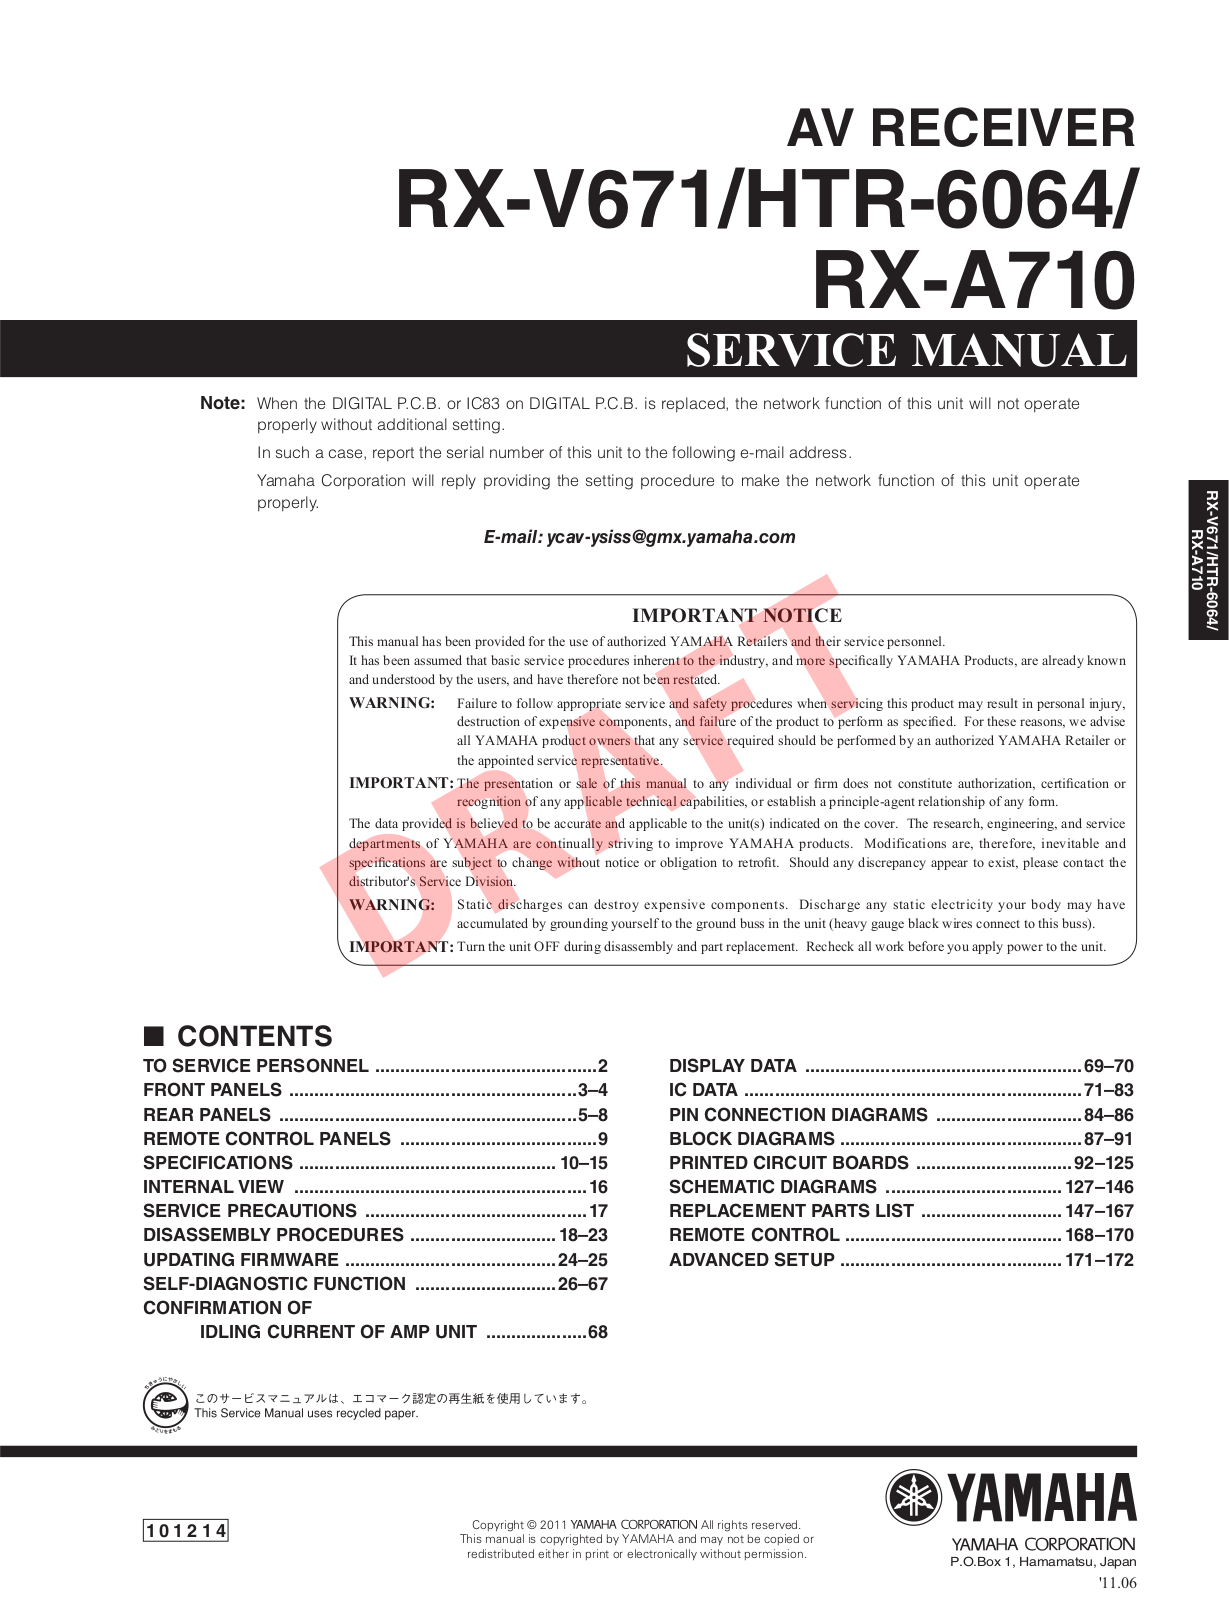 Yamaha RX-V671, HTR-6064 Service Manual